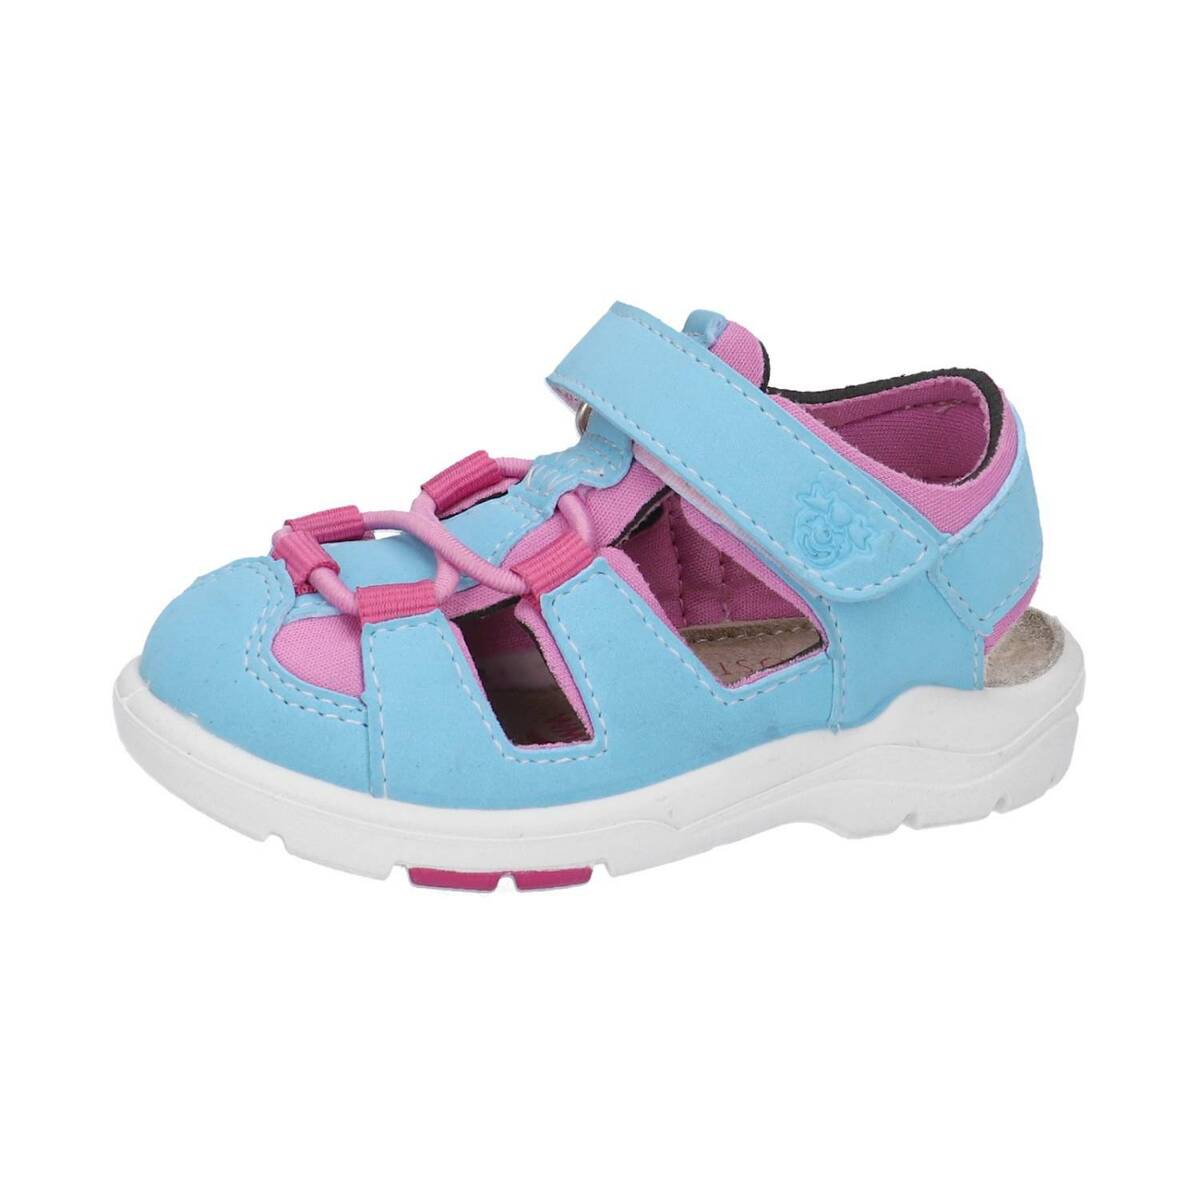 Ricosta Pepino Gery Kids Sandals | slipper | Textile, synthetic - NEW | eBay